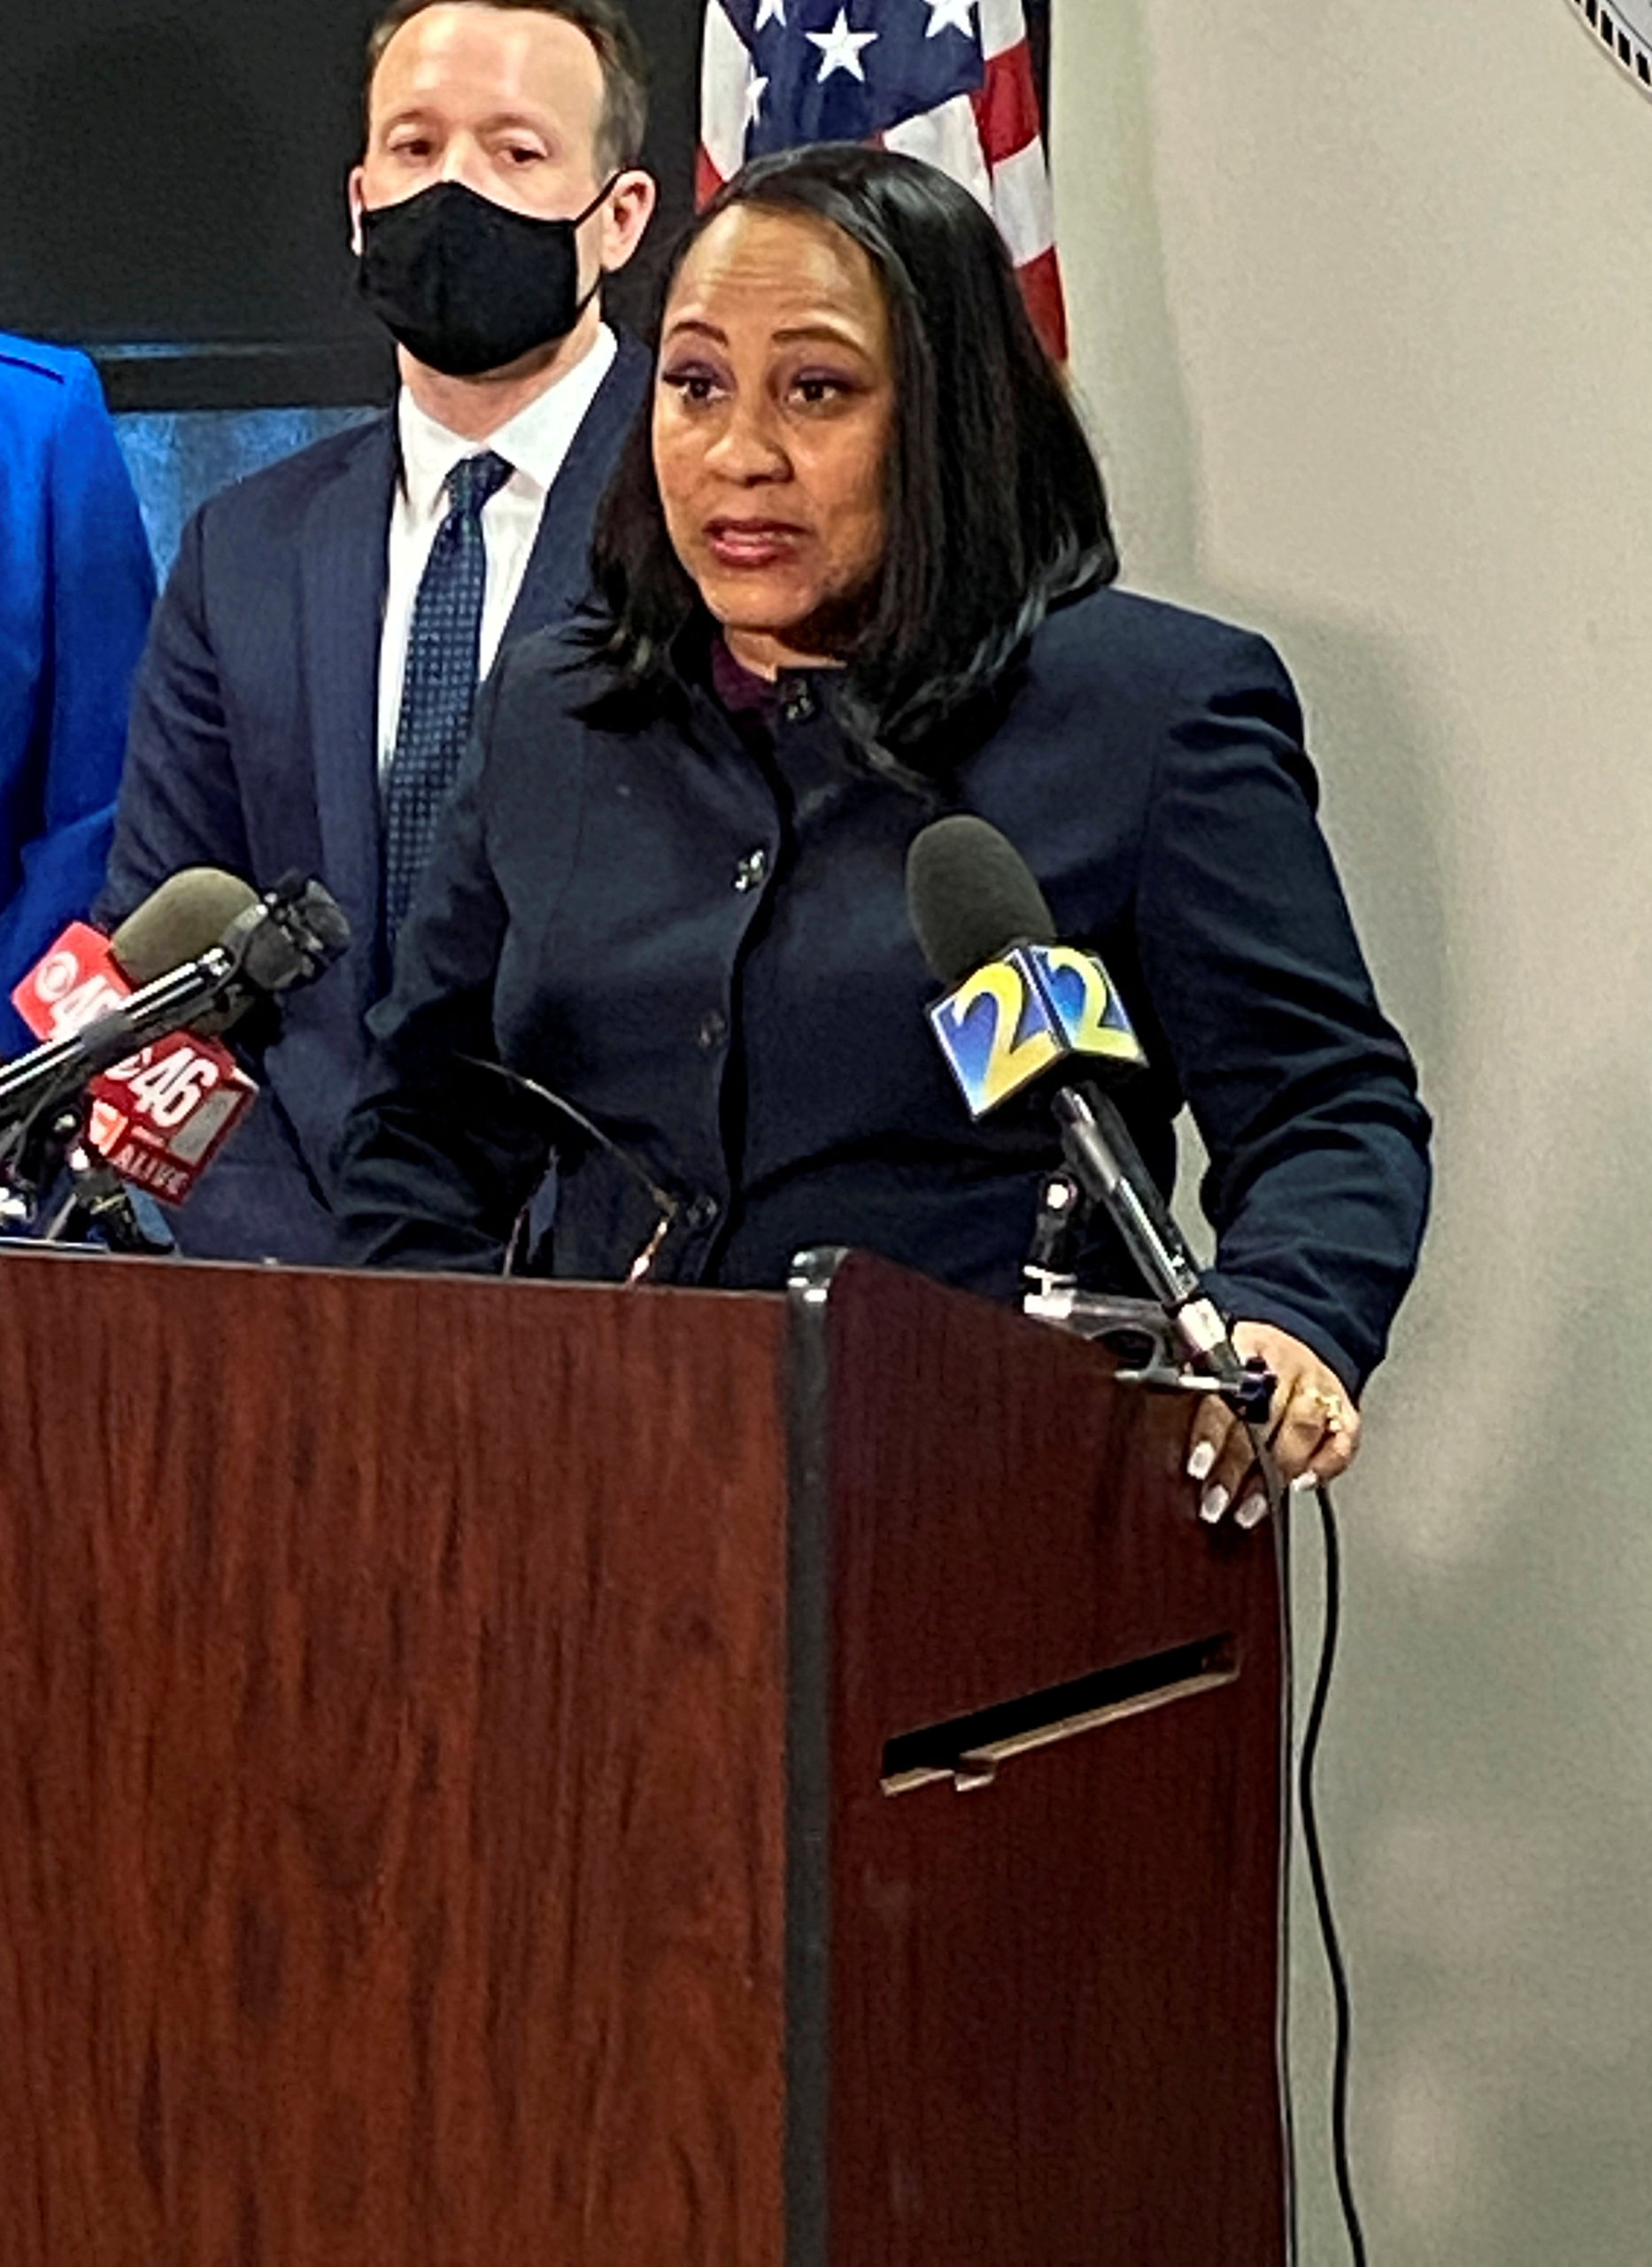 FILE PHOTO: Fulton County District Attorney Fani Willis speaks at a news conference in Atlanta, Georgia, U.S., May 11, 2021. REUTERS/Linda So/File Photo